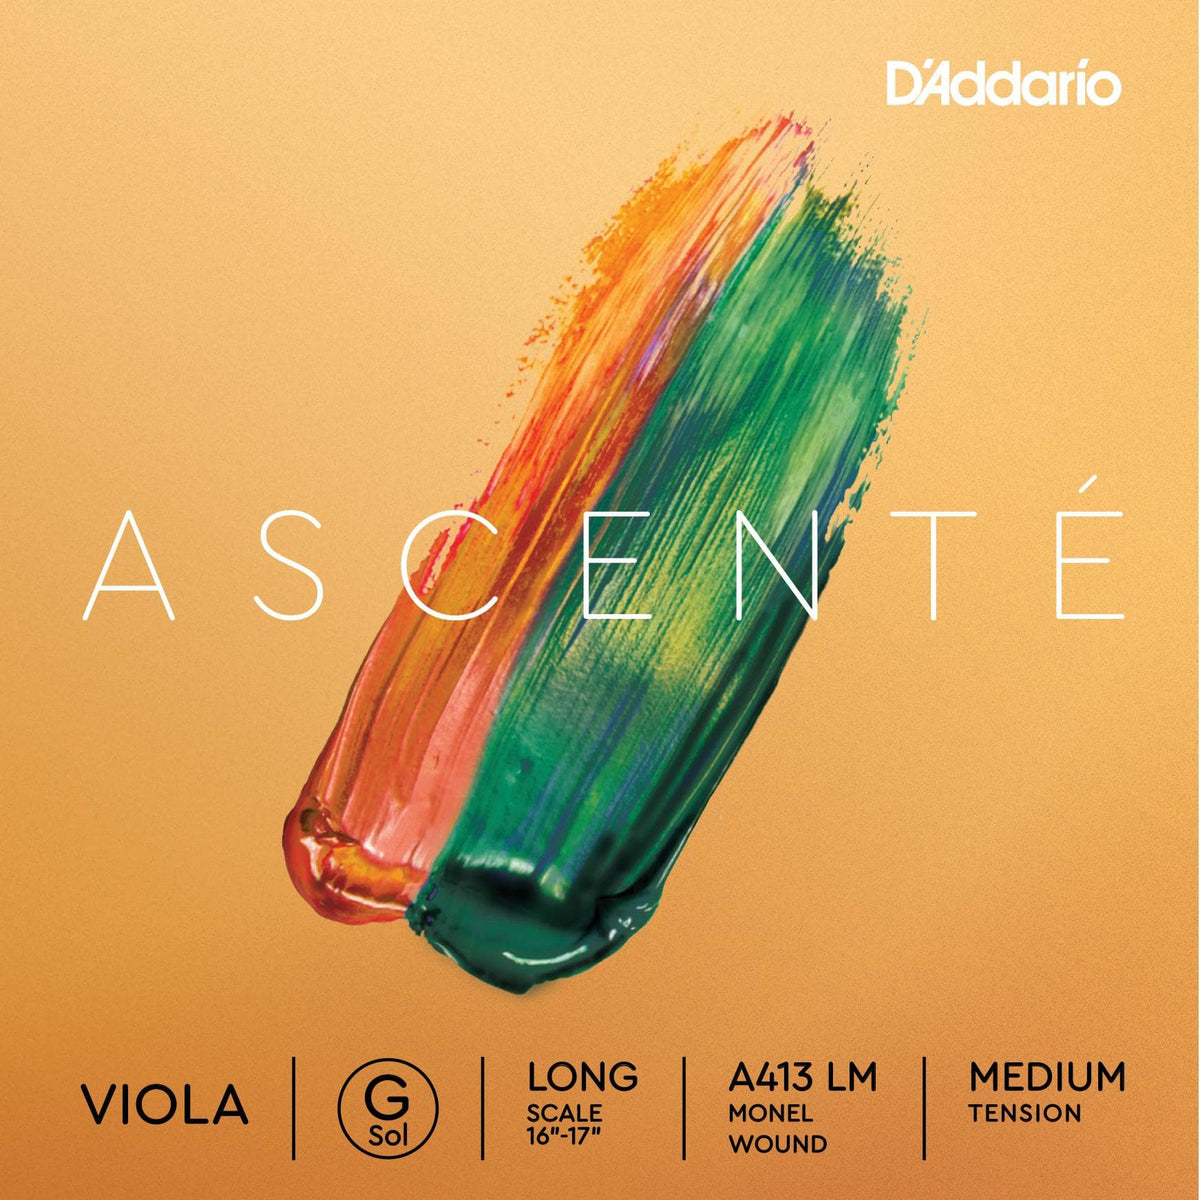 DAddario Ascente Viola G String